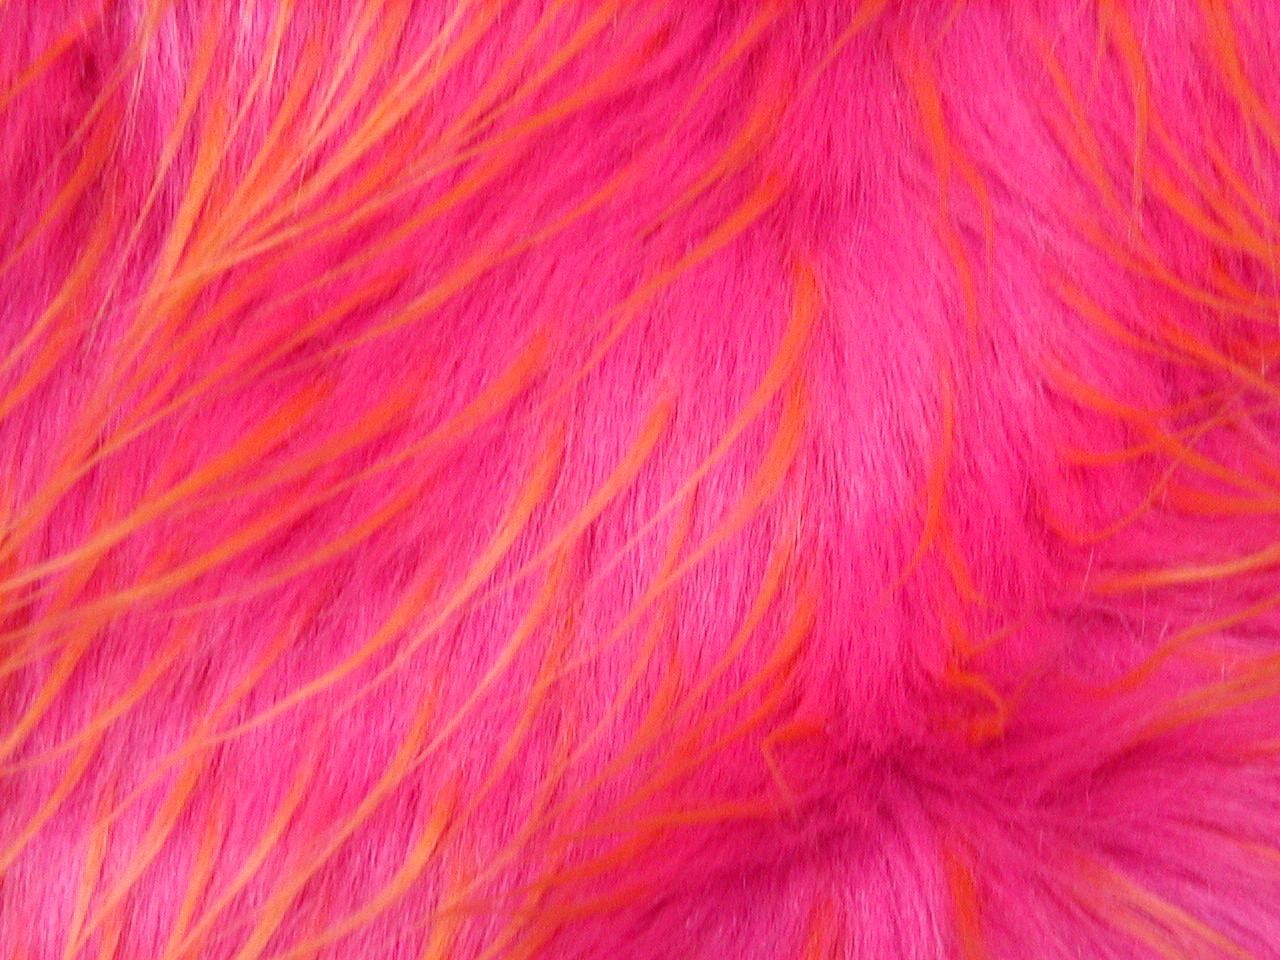 Pink fur wallpaper